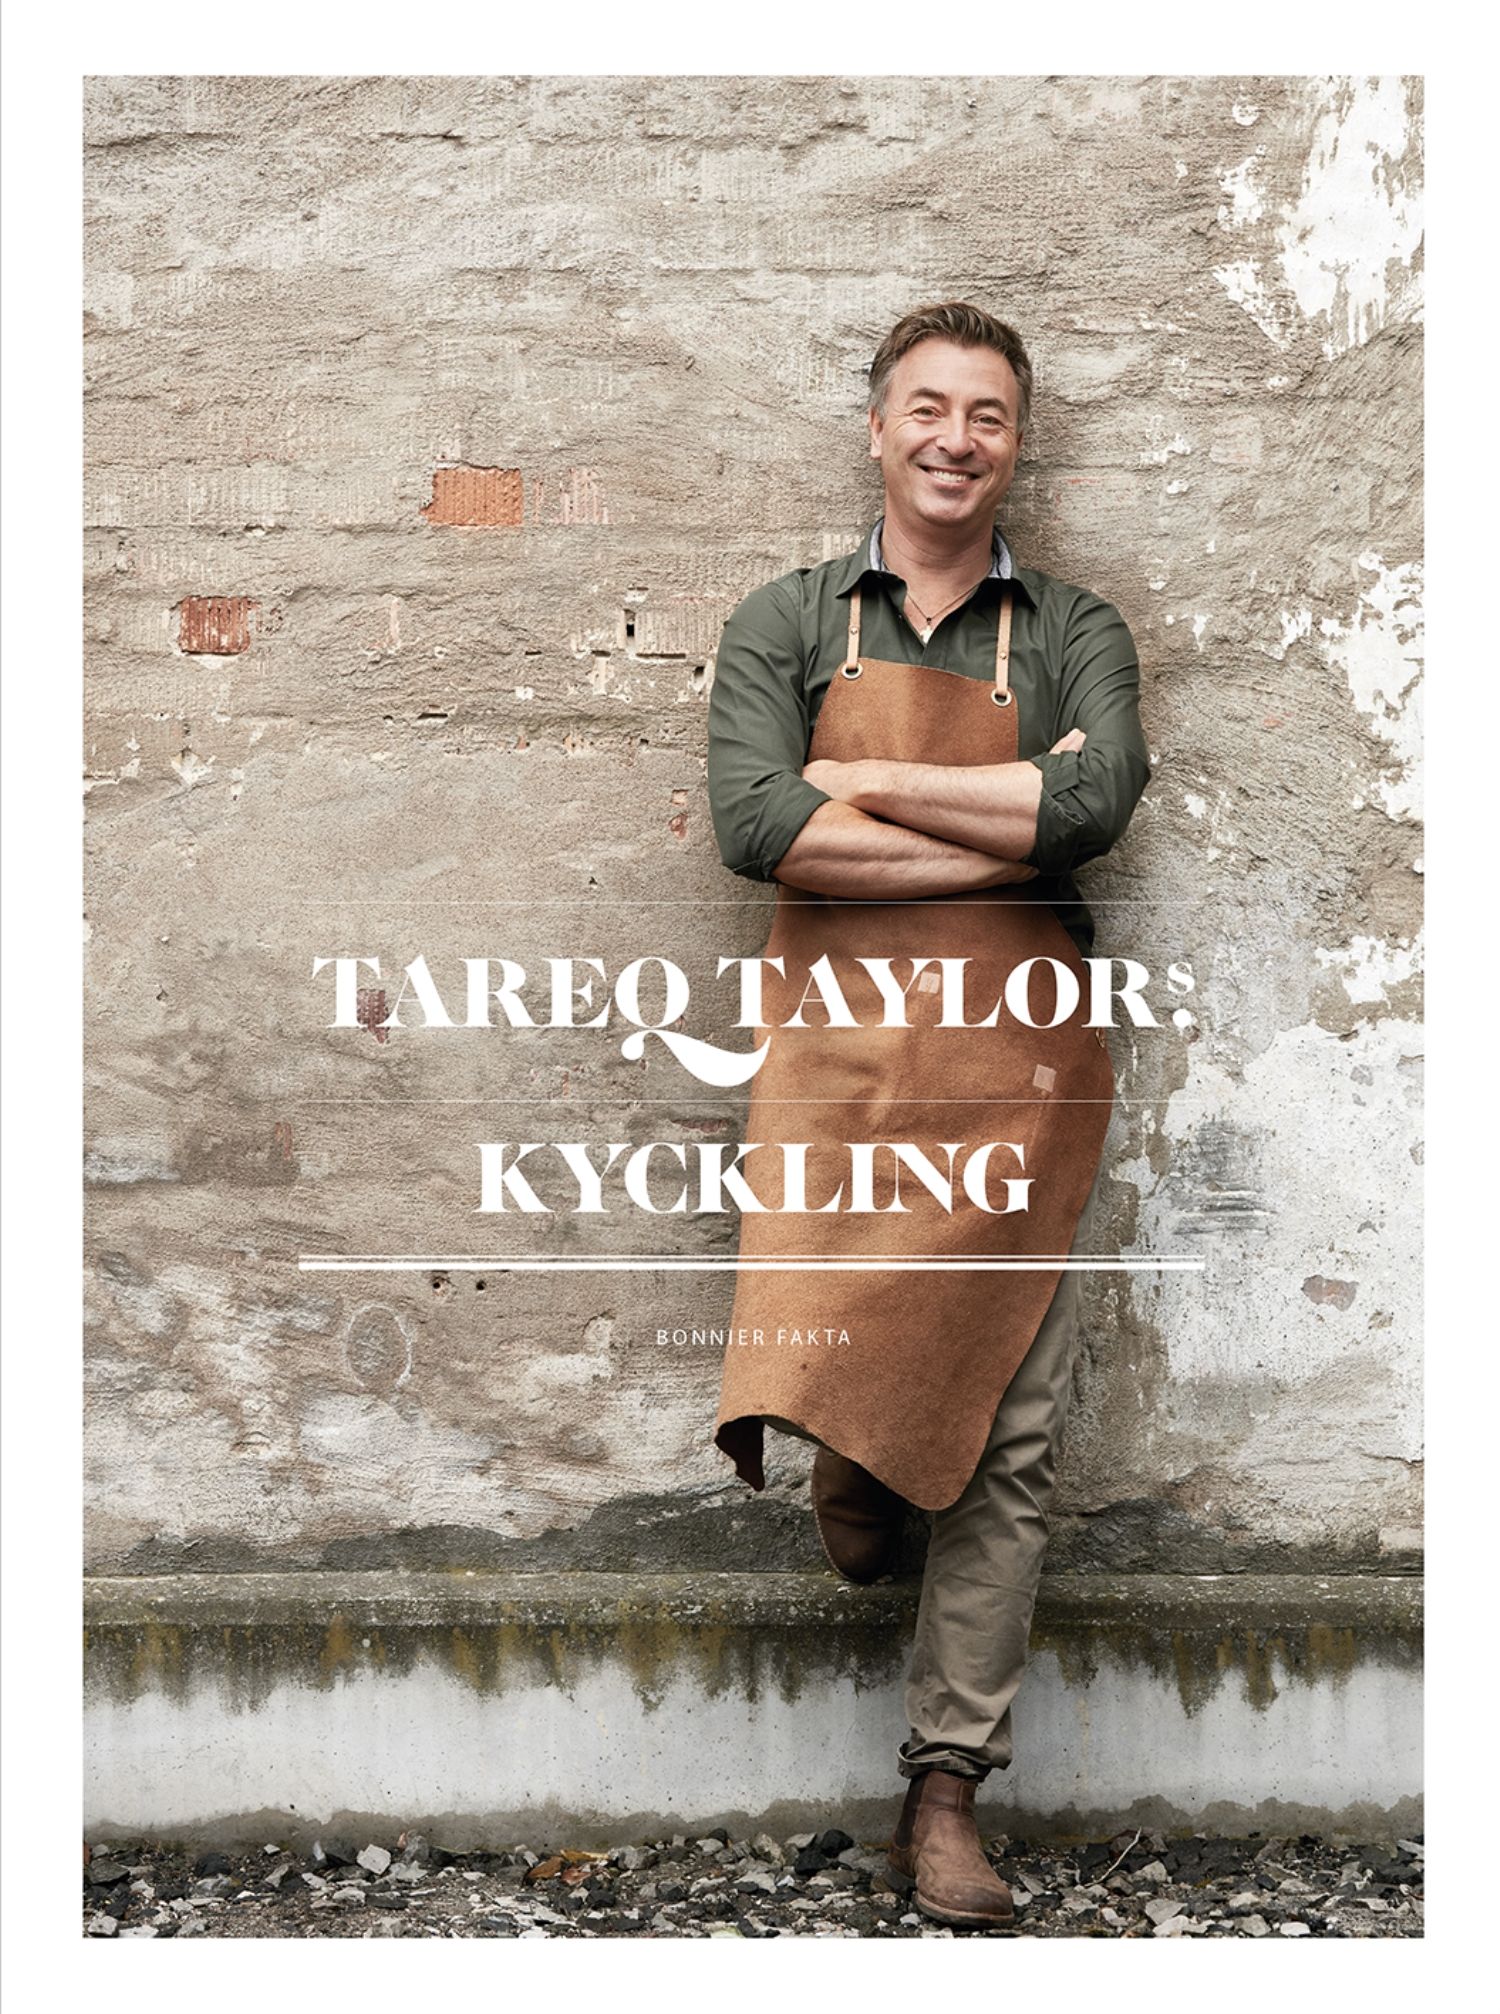 Tareq Taylors kyckling, eBook by Tareq Taylor